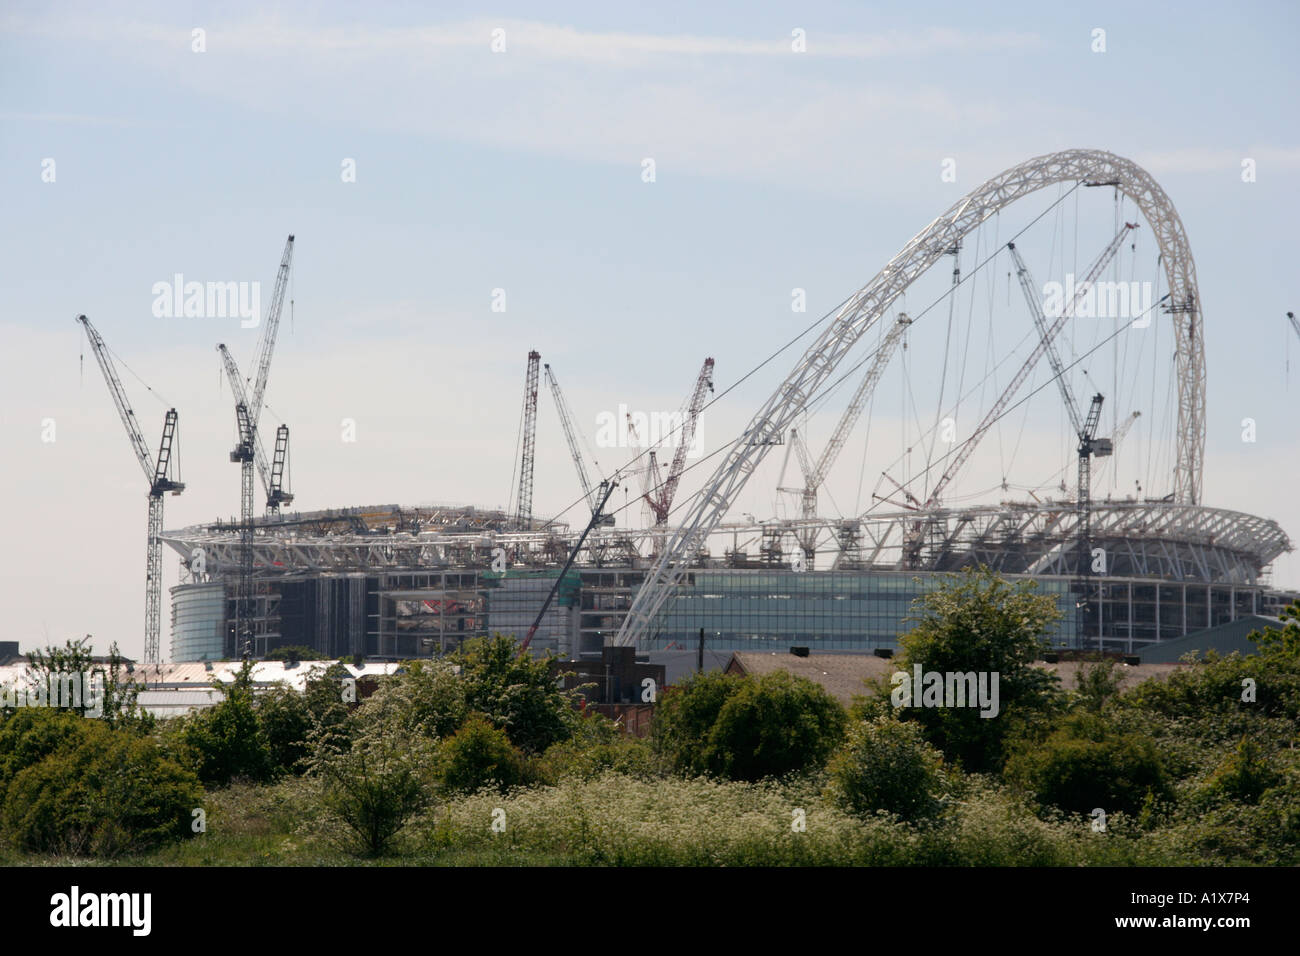 Nouveau stade de football de Wembley en construction Banque D'Images